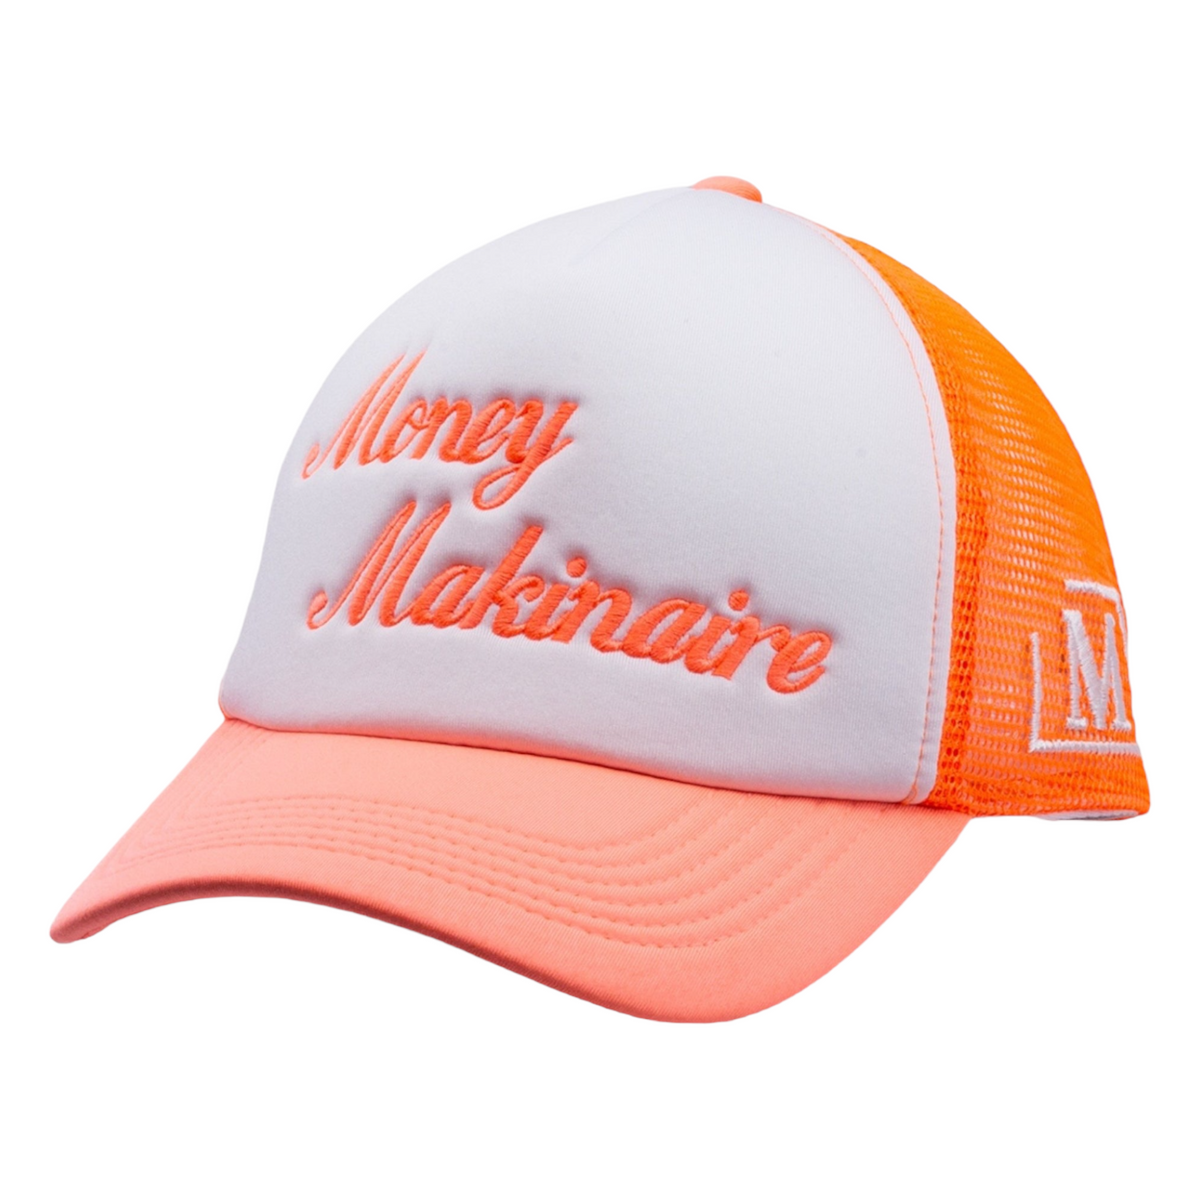 MDB Brand Money Makinaire Hat - Warm Color